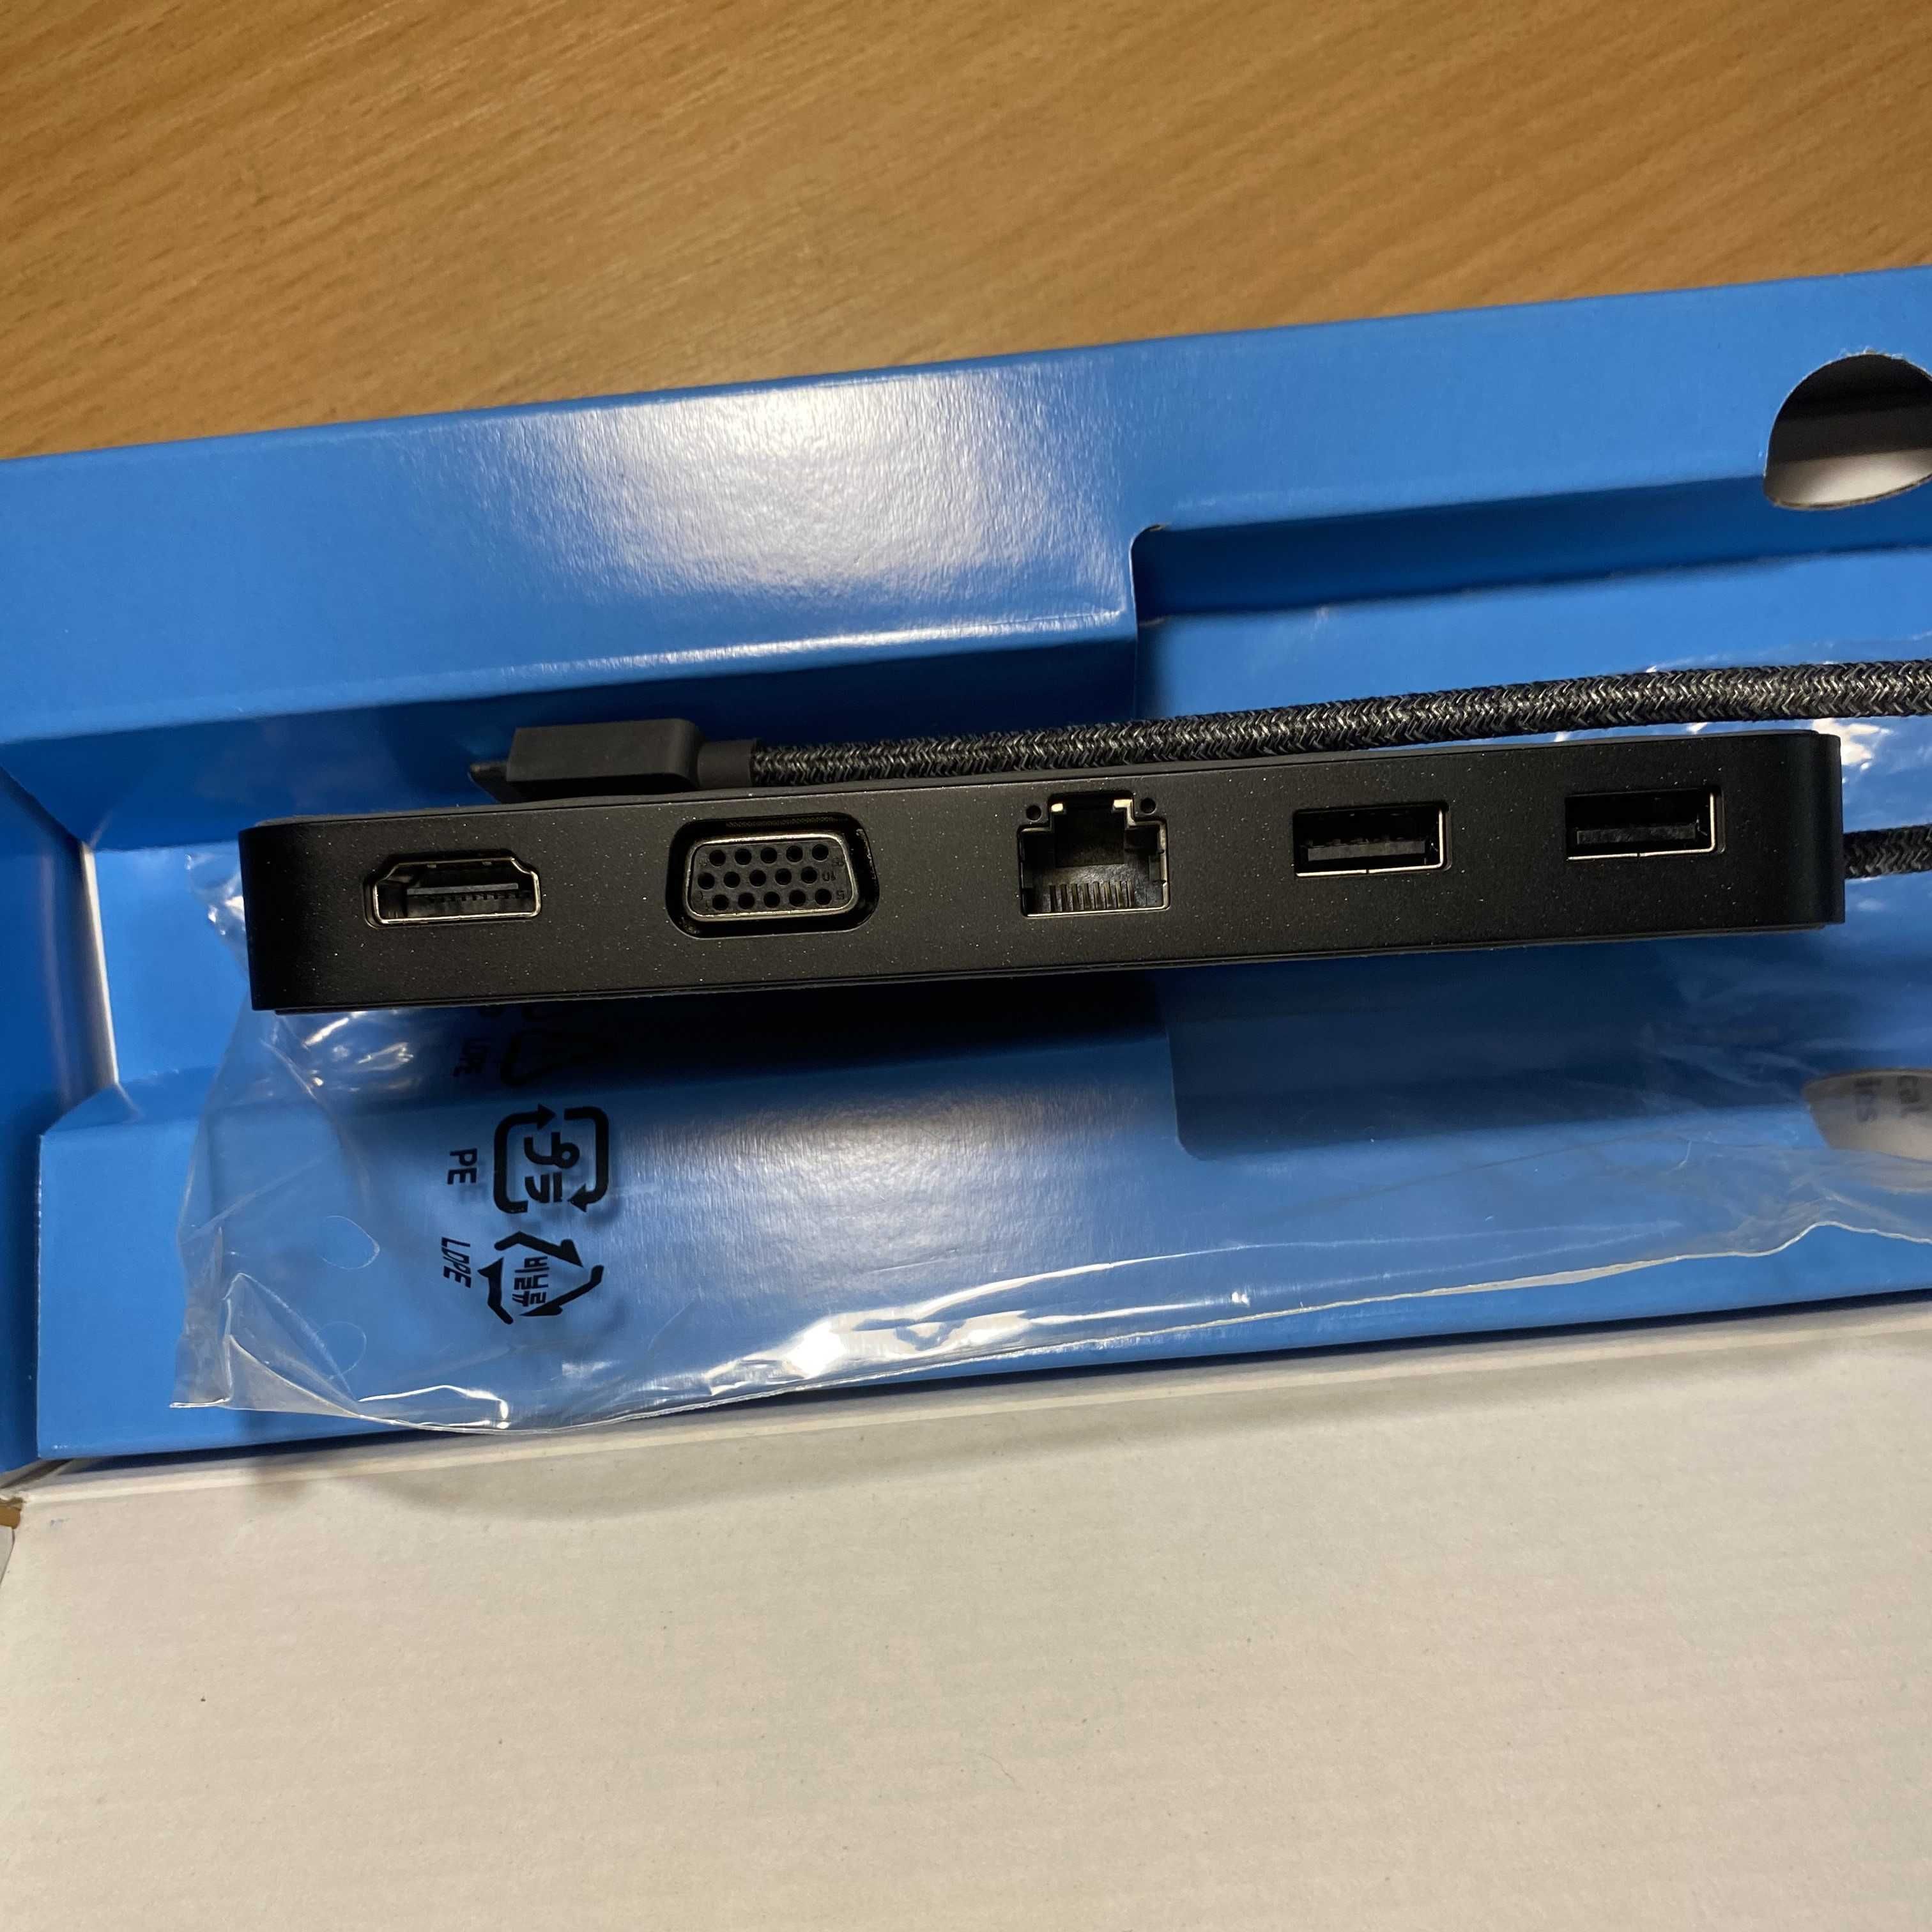 HP USB-C Mini Dock 1PM64AA#AC3